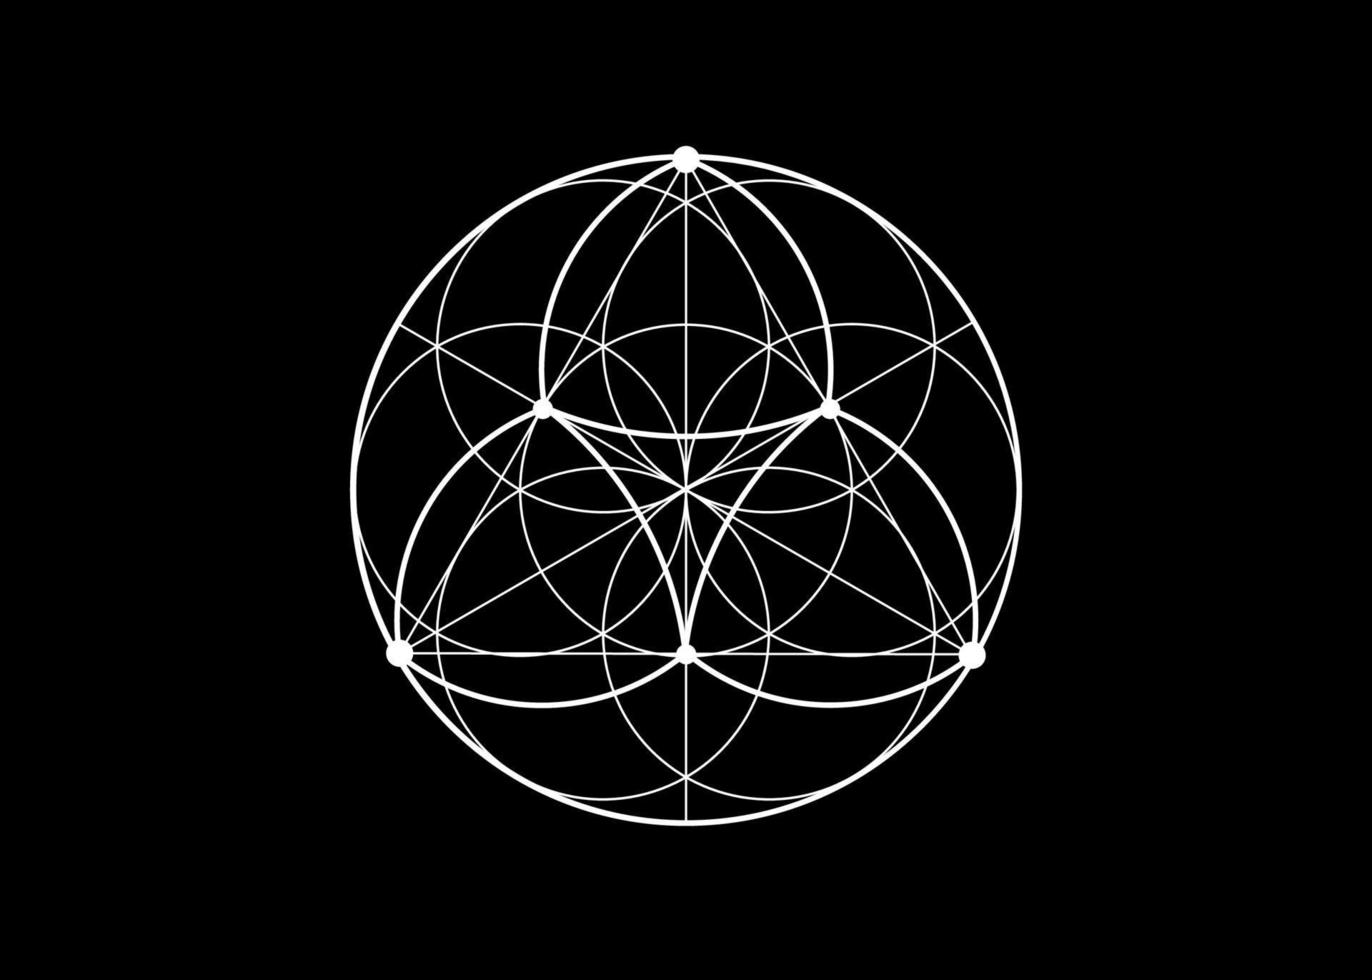 Seed Flower of life lotus icon, yantra mandala sacred geometry, tattoo symbol of harmony and balance. Mystical talisman, white lines vector isolated on black background